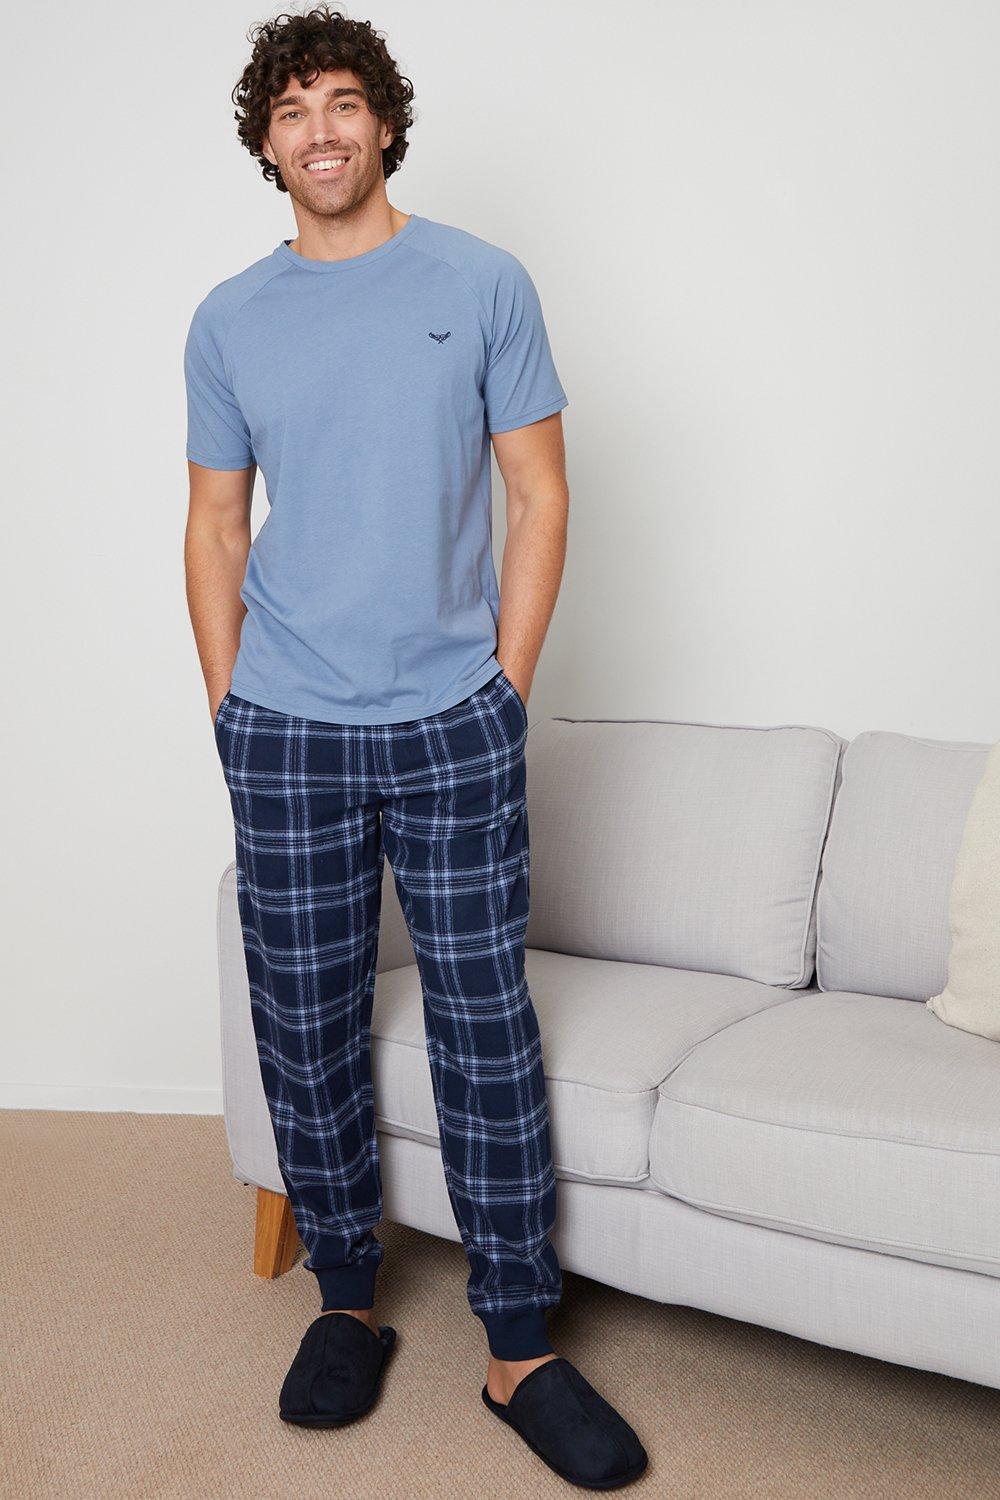 Benson & Brown Woven Cotton Mens Pajamas Sleepwear Set 